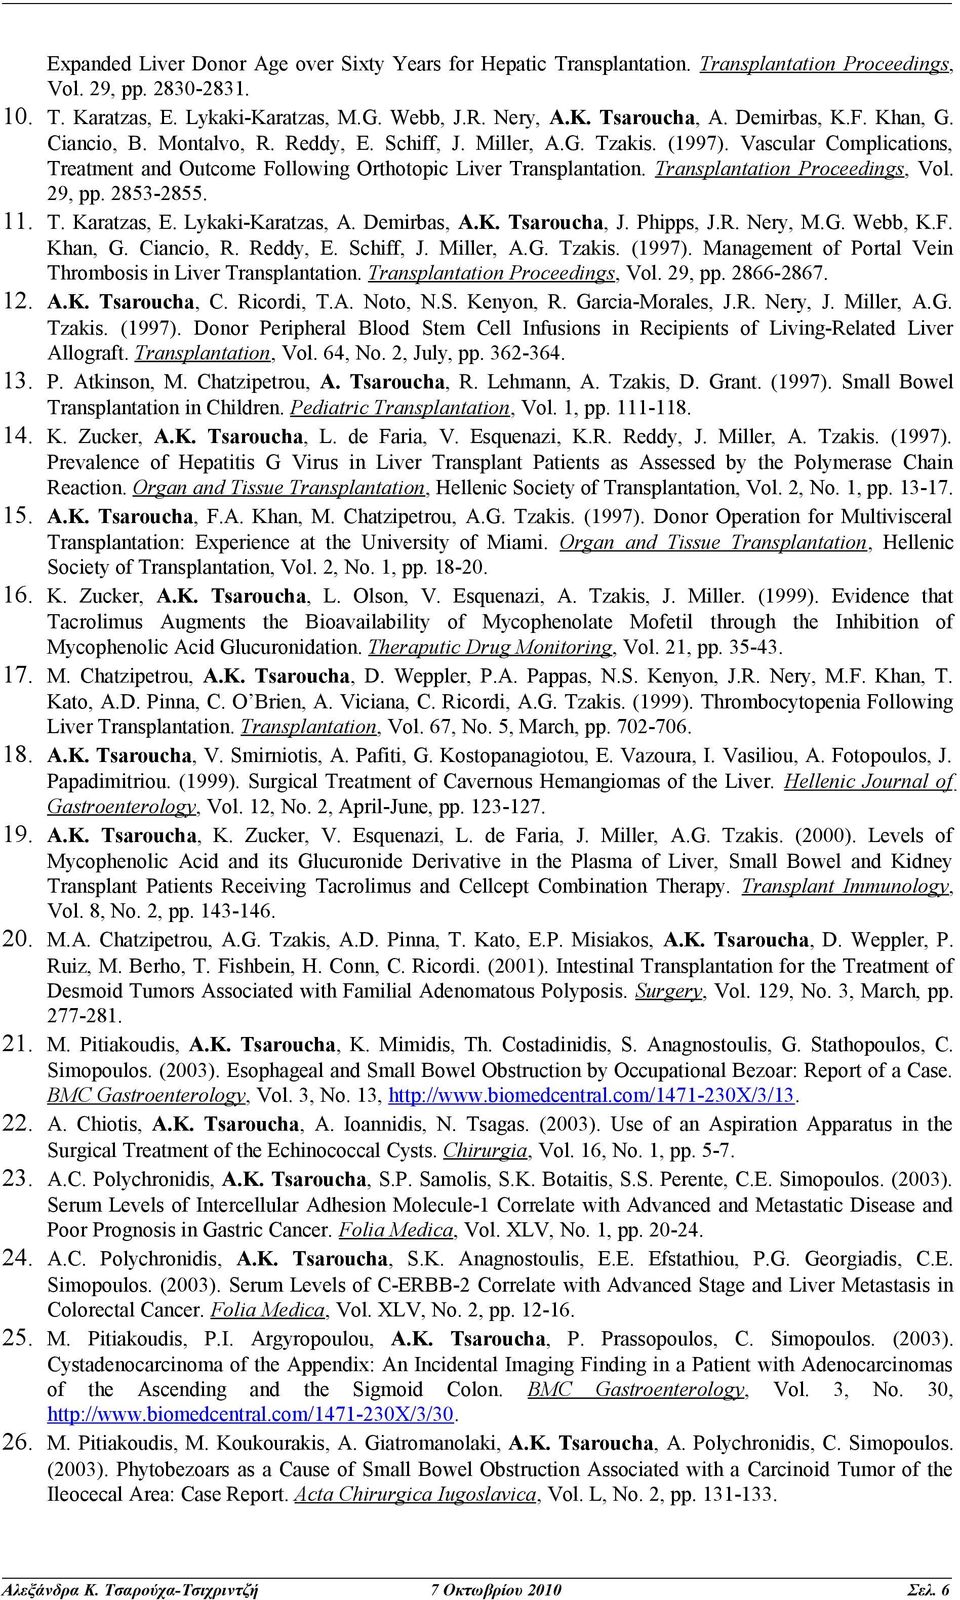 Transplantation Proceedings, Vol. 29, pp. 2853-2855. 11. T. Karatzas, E. Lykaki-Karatzas, A. Demirbas, A.K. Tsaroucha, J. Phipps, J.R. Nery, M.G. Webb, K.F. Khan, G. Ciancio, R. Reddy, E. Schiff, J.